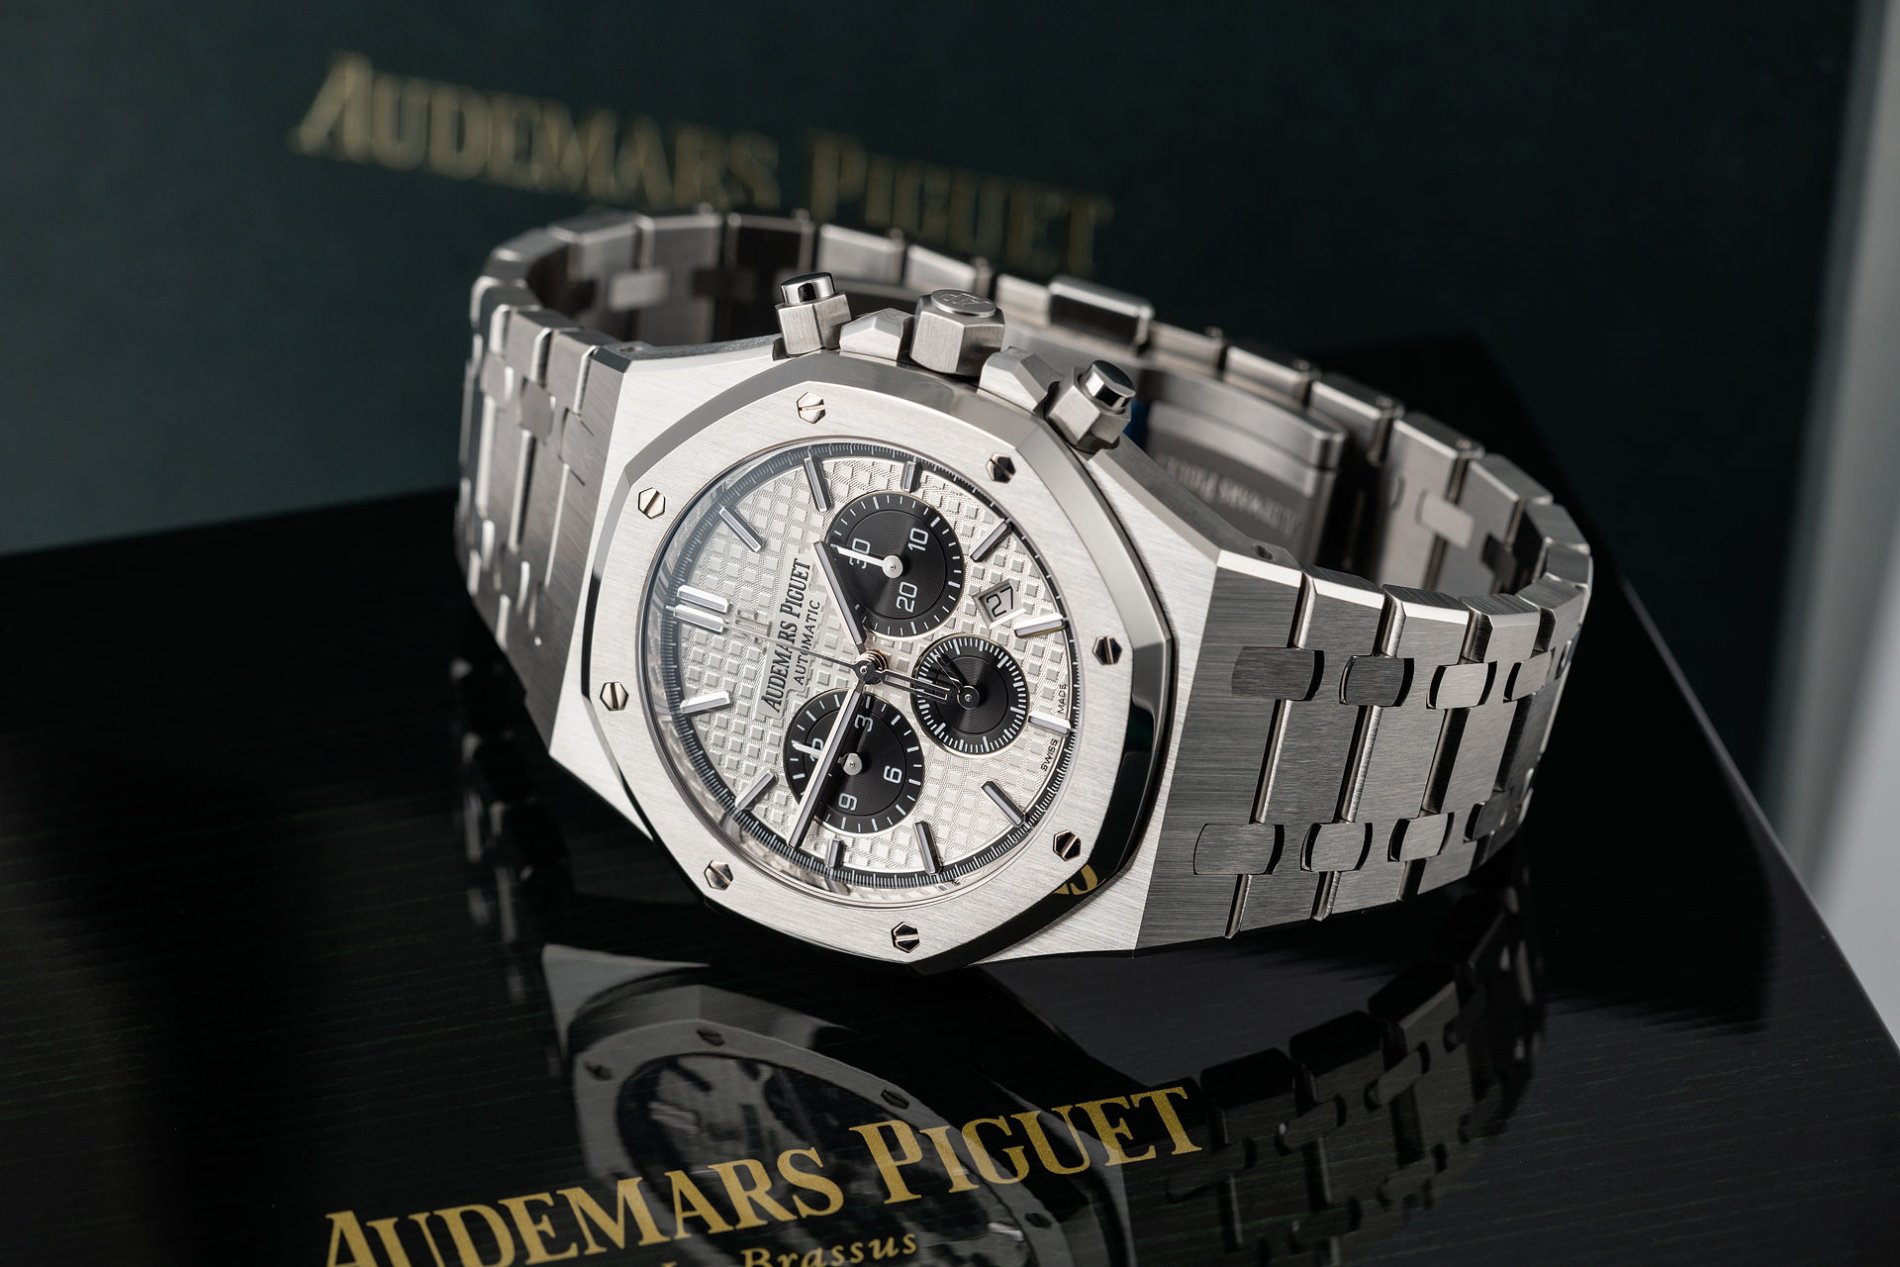 watch-club-audemars-piguet-royal-oak-chronograph-under-ap-warranty-to-2023-ref-26331stoo1220s...jpeg